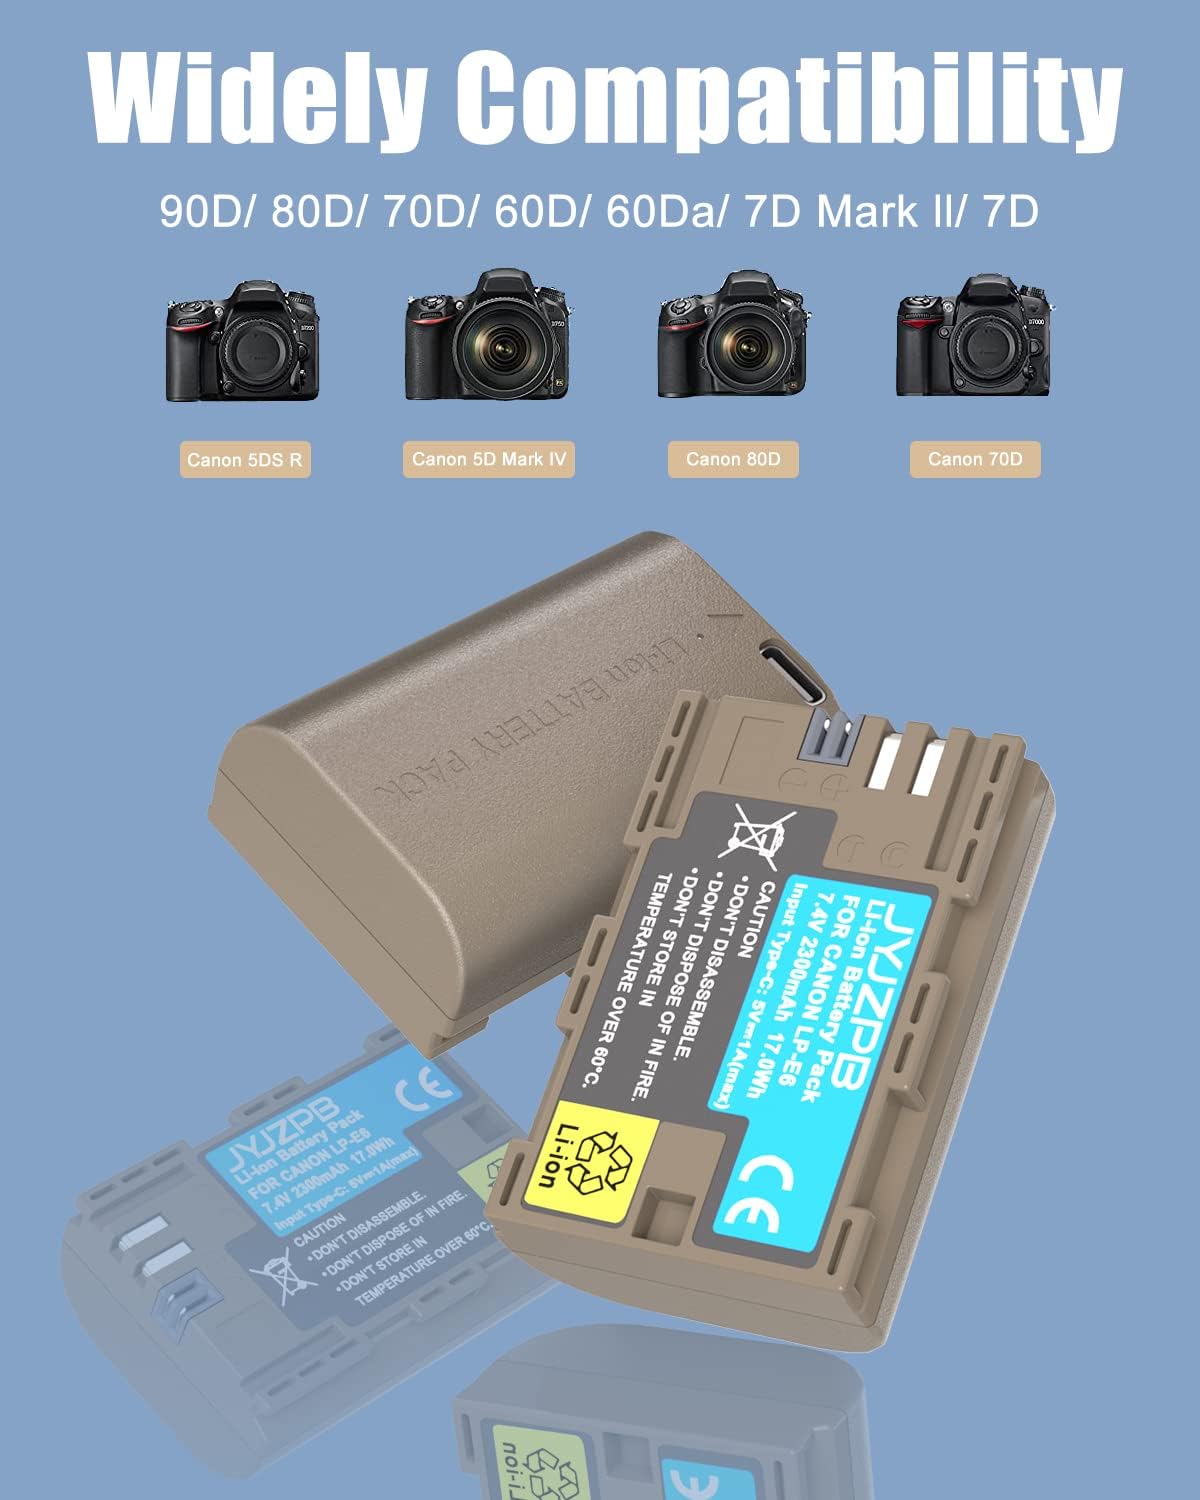 2 Packs JYJZPB LP-E6N LP-E6 Replacement Camera Battery for Canon 60D, 70D, 80D, 90D, EOS 5D Mark II/III/IV, EOS 5DS, 5DS, 6D, 7D, 7D Mark II, 7D EOS R, R5, R6 Digital Camera